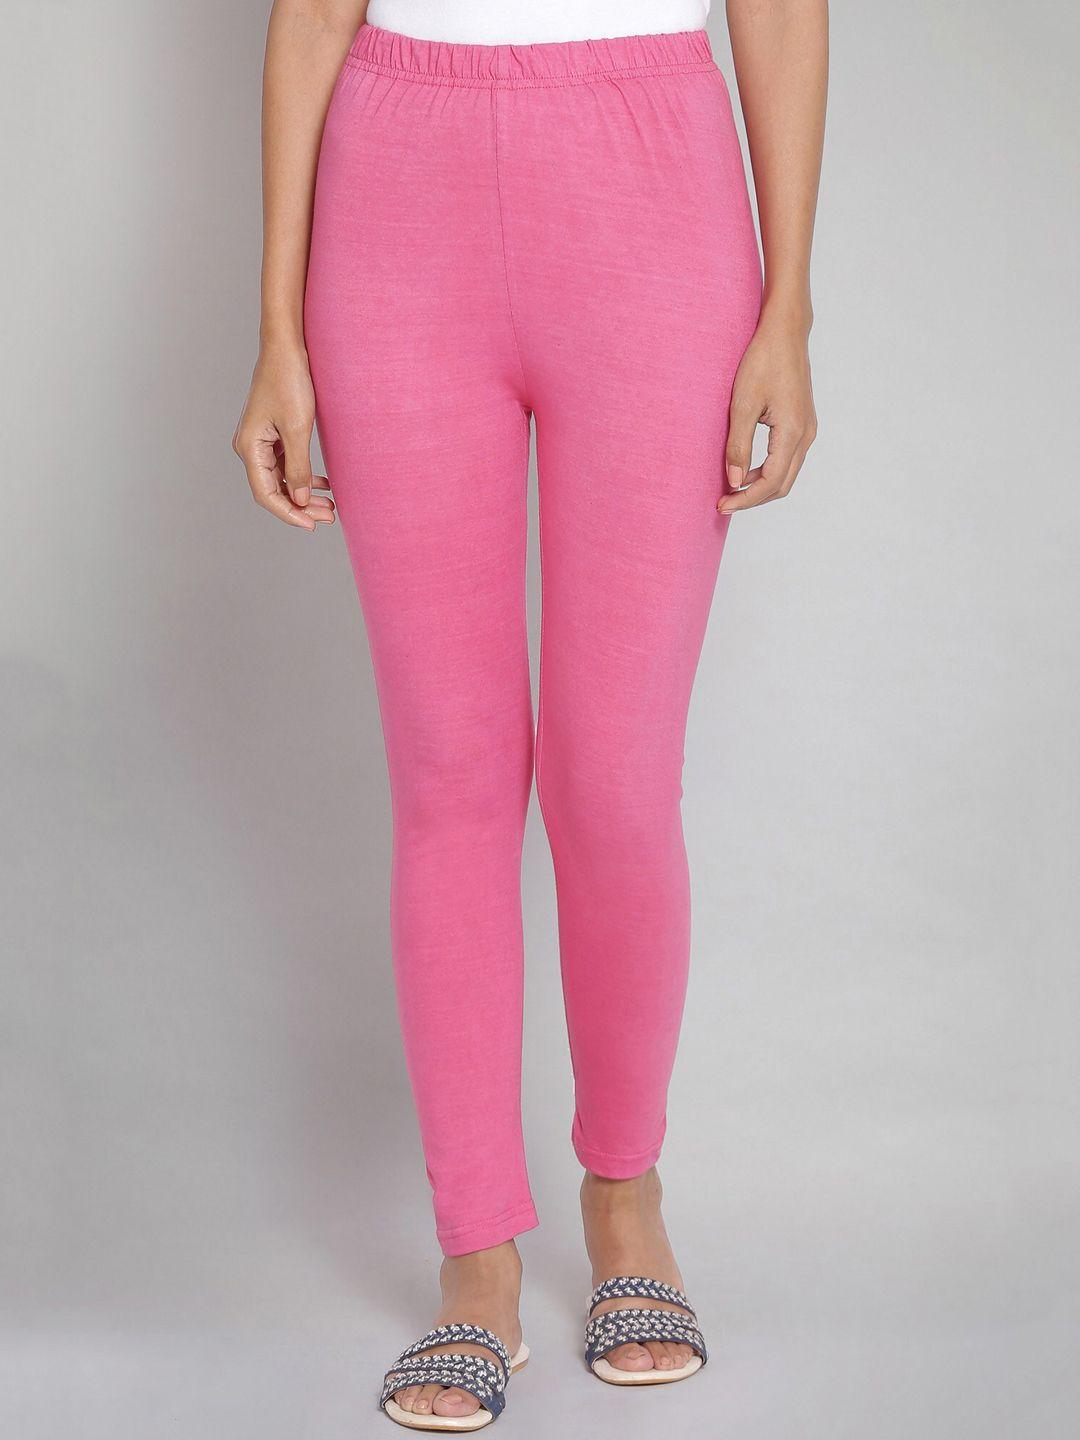 aurelia women pink solid tights